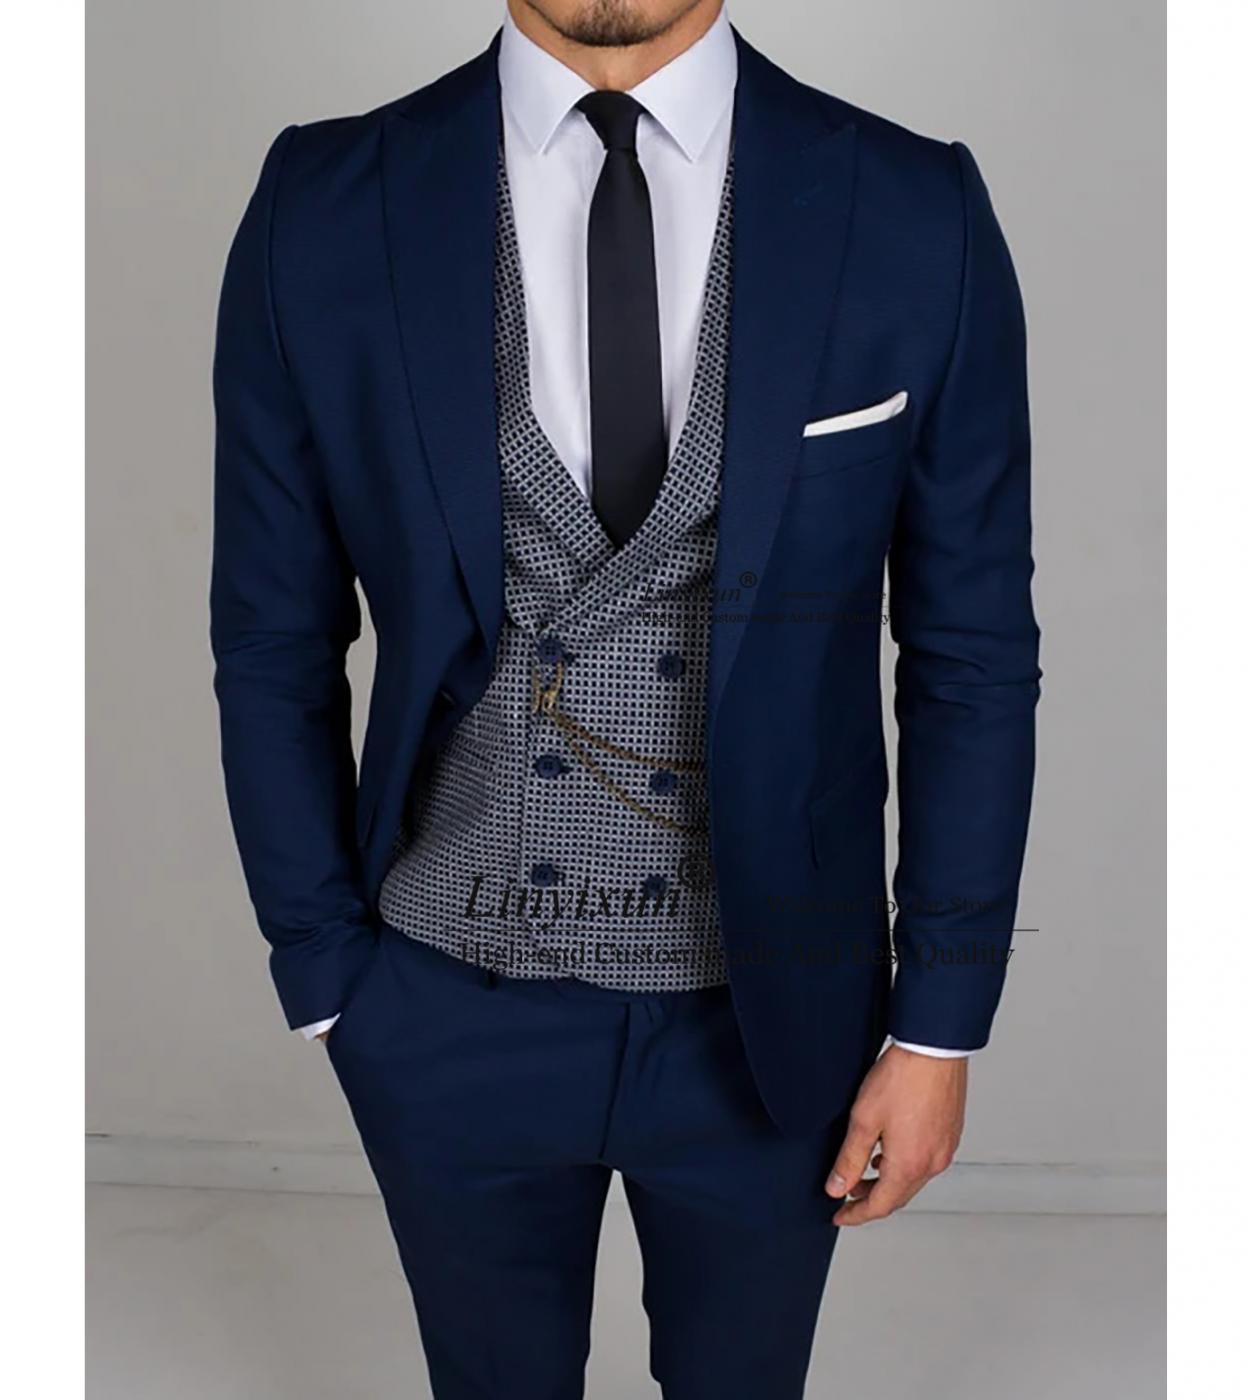 Casual Navy Blue Men Suits Office Workwear Groom Tuxedo Wedding 3 Piece Male Fashion Style Jacket Vest Pants Set Costume